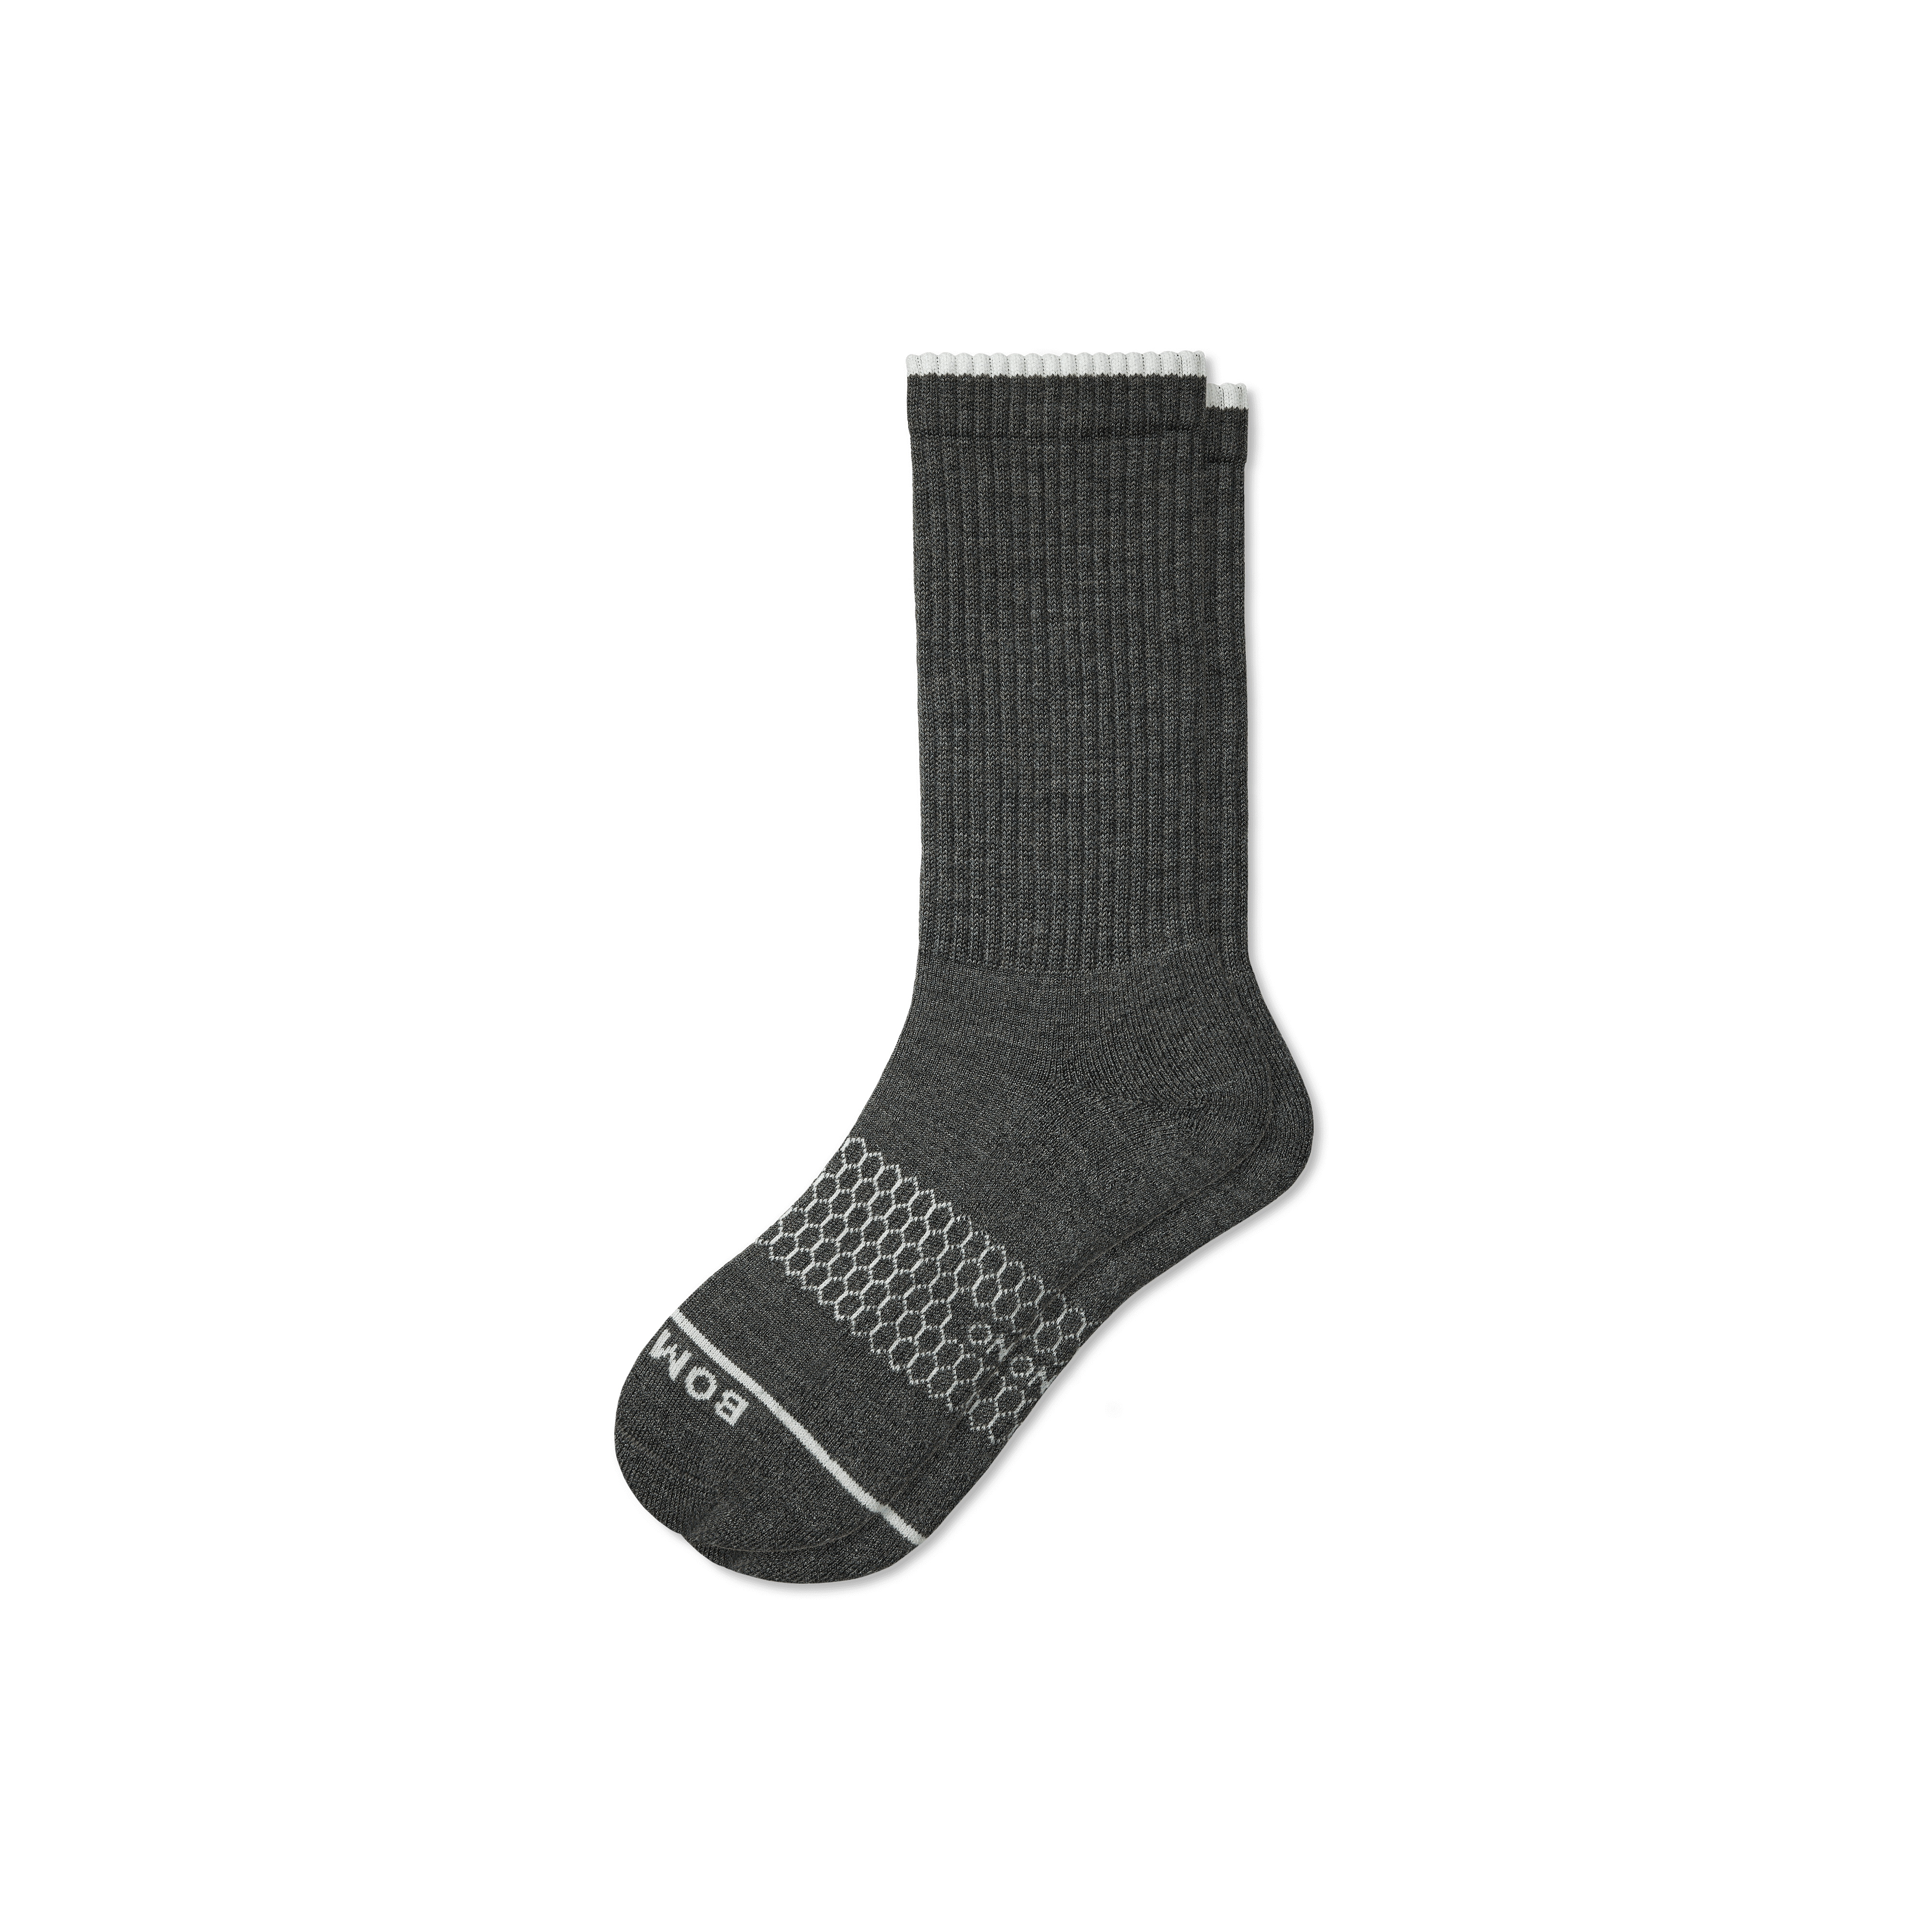 Shop Bombas Wool-Blend Cashmere Calf Socks